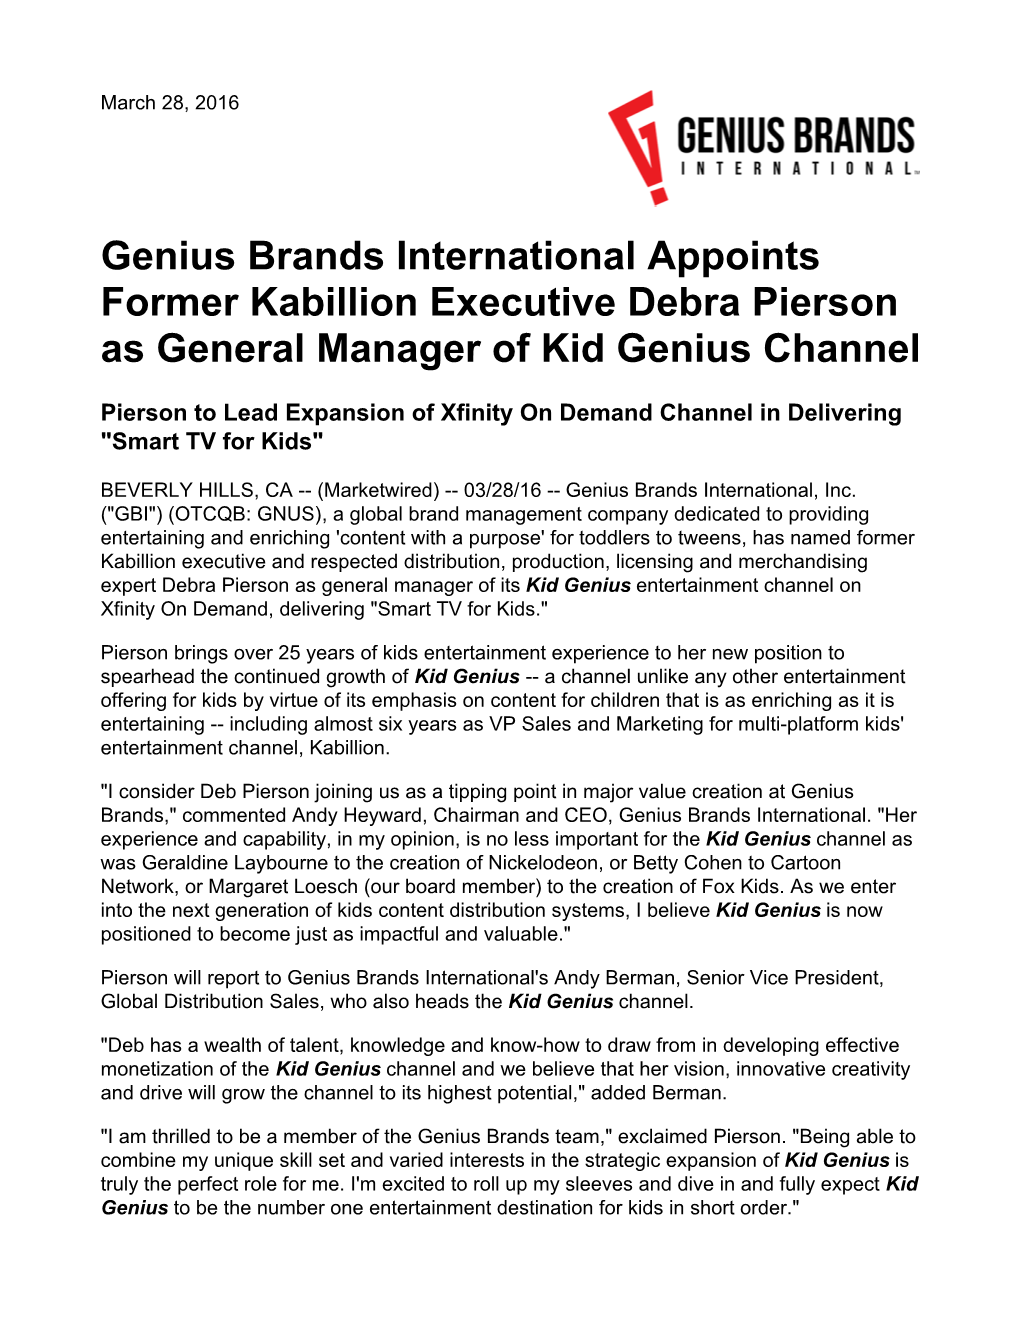 Genius Brands International Appoints Former Kabillion Executive Debra Pierson As General Manager of Kid Genius Channel